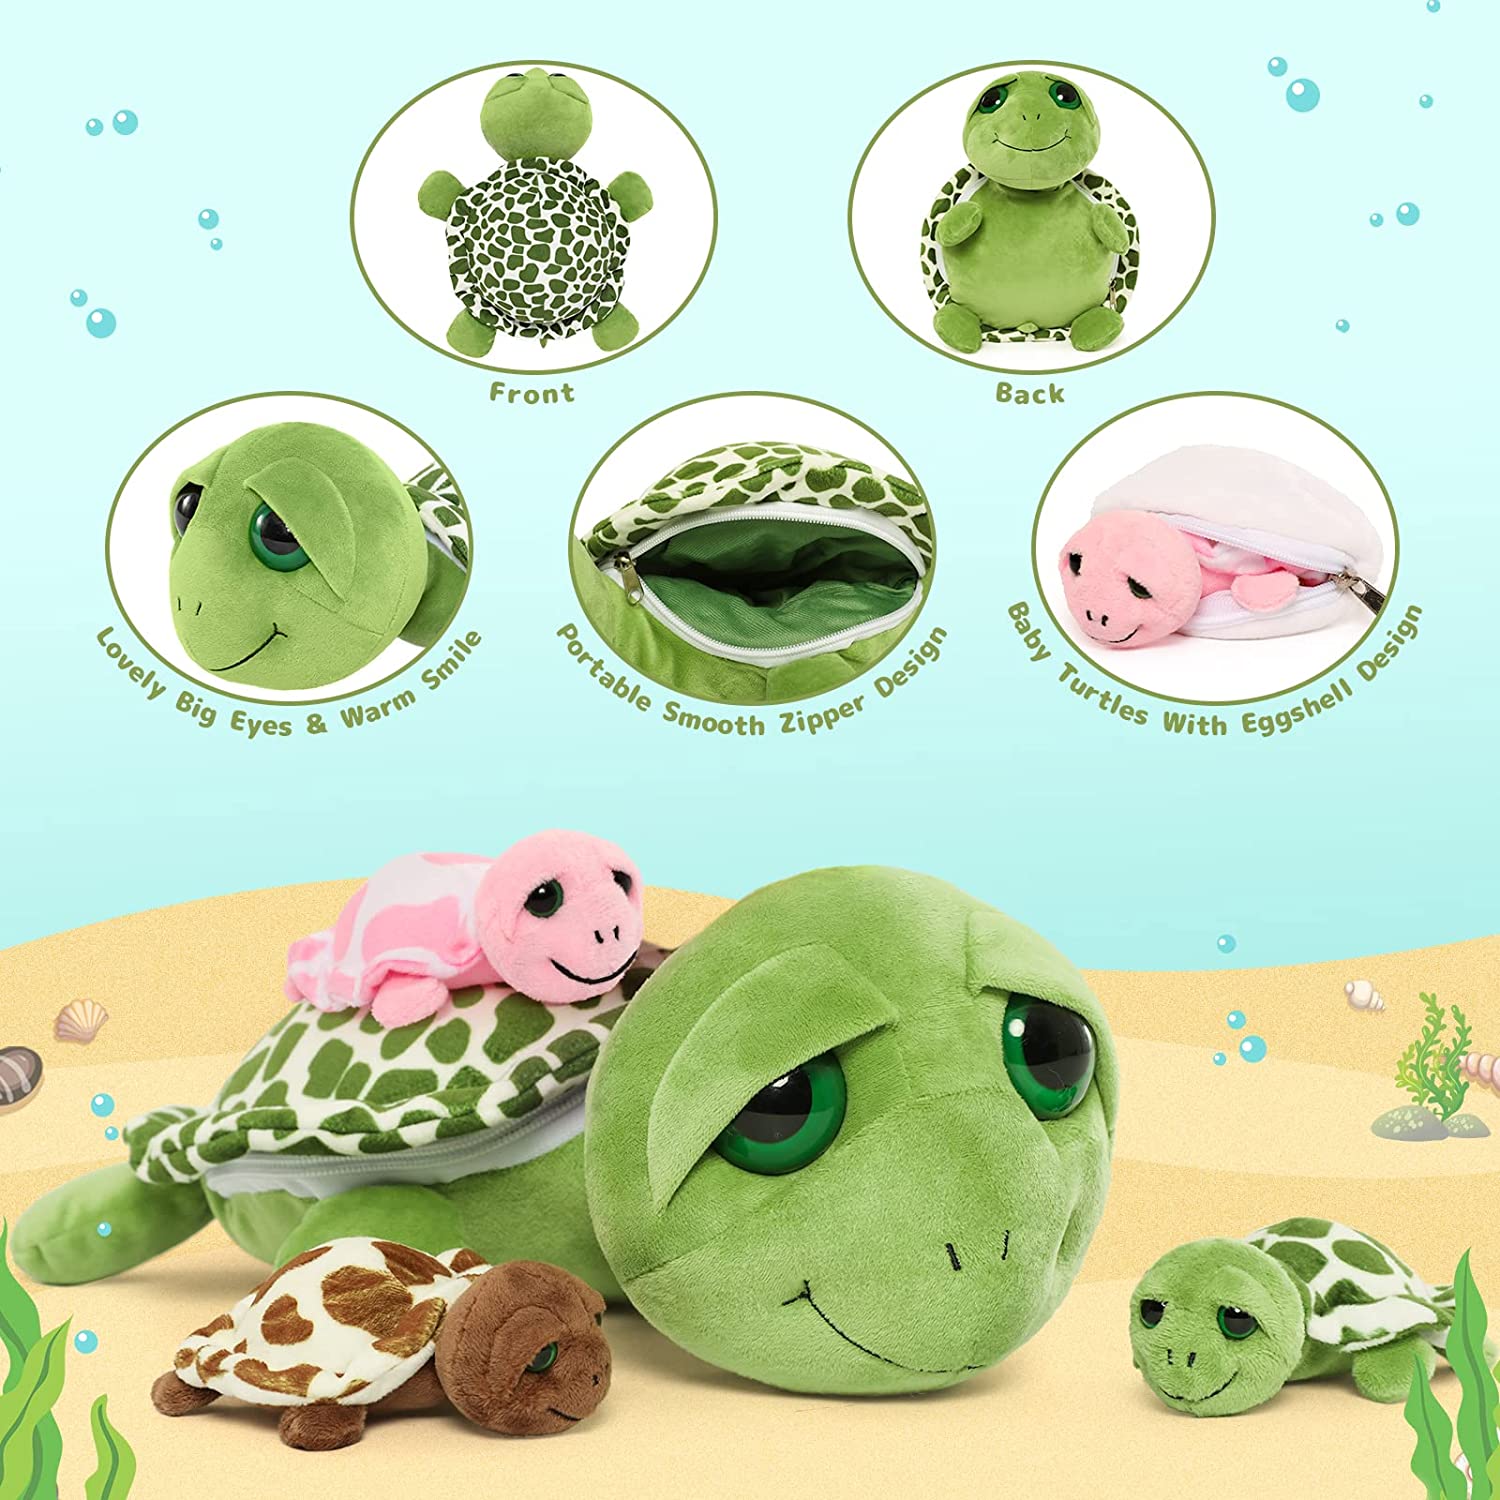 Cute Sea Turtle Stuffed Toy Set, 14 Inches